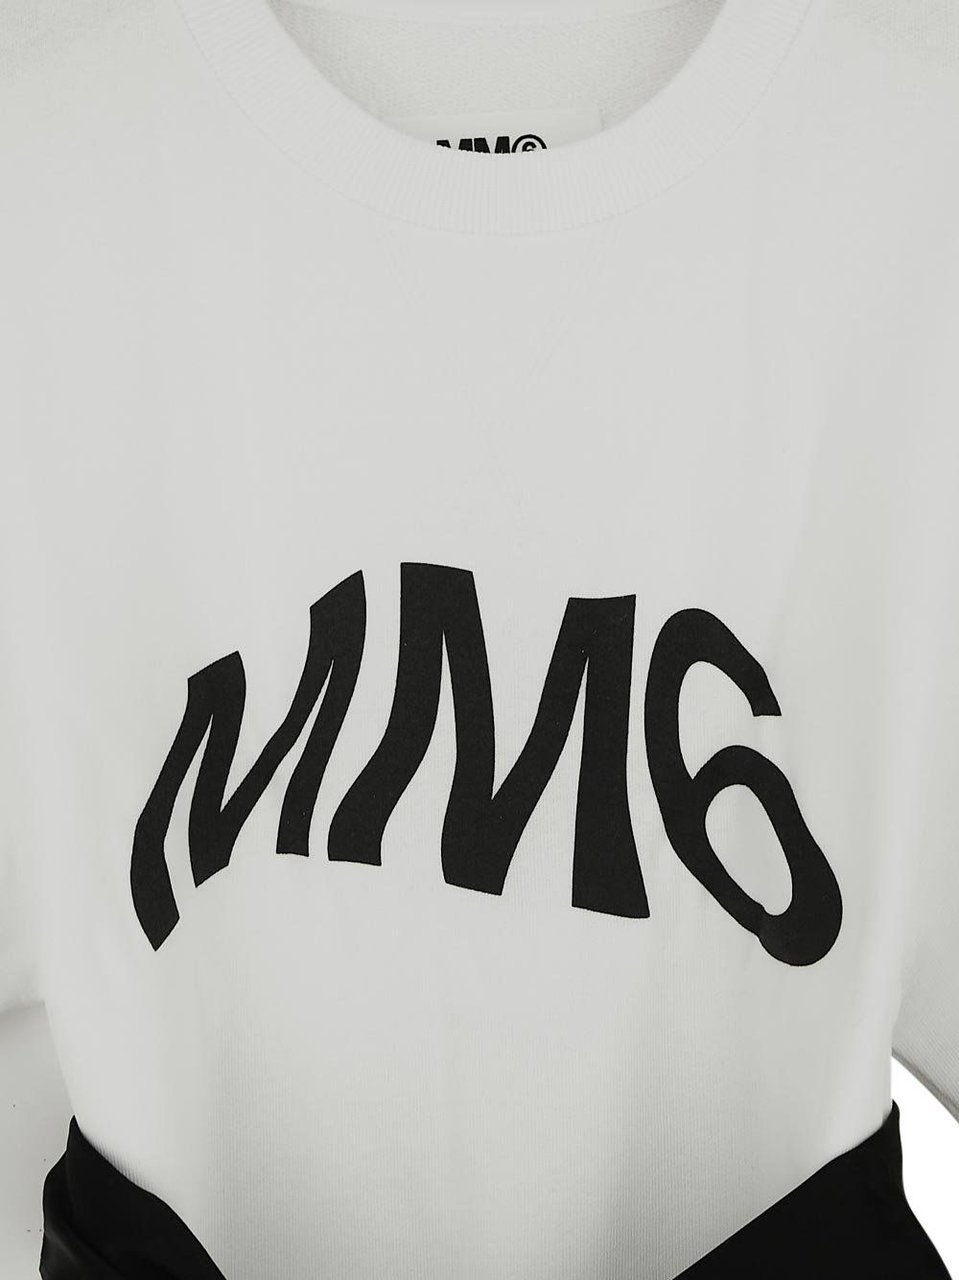 MM6 Maison Margiela Logo Dress Wit